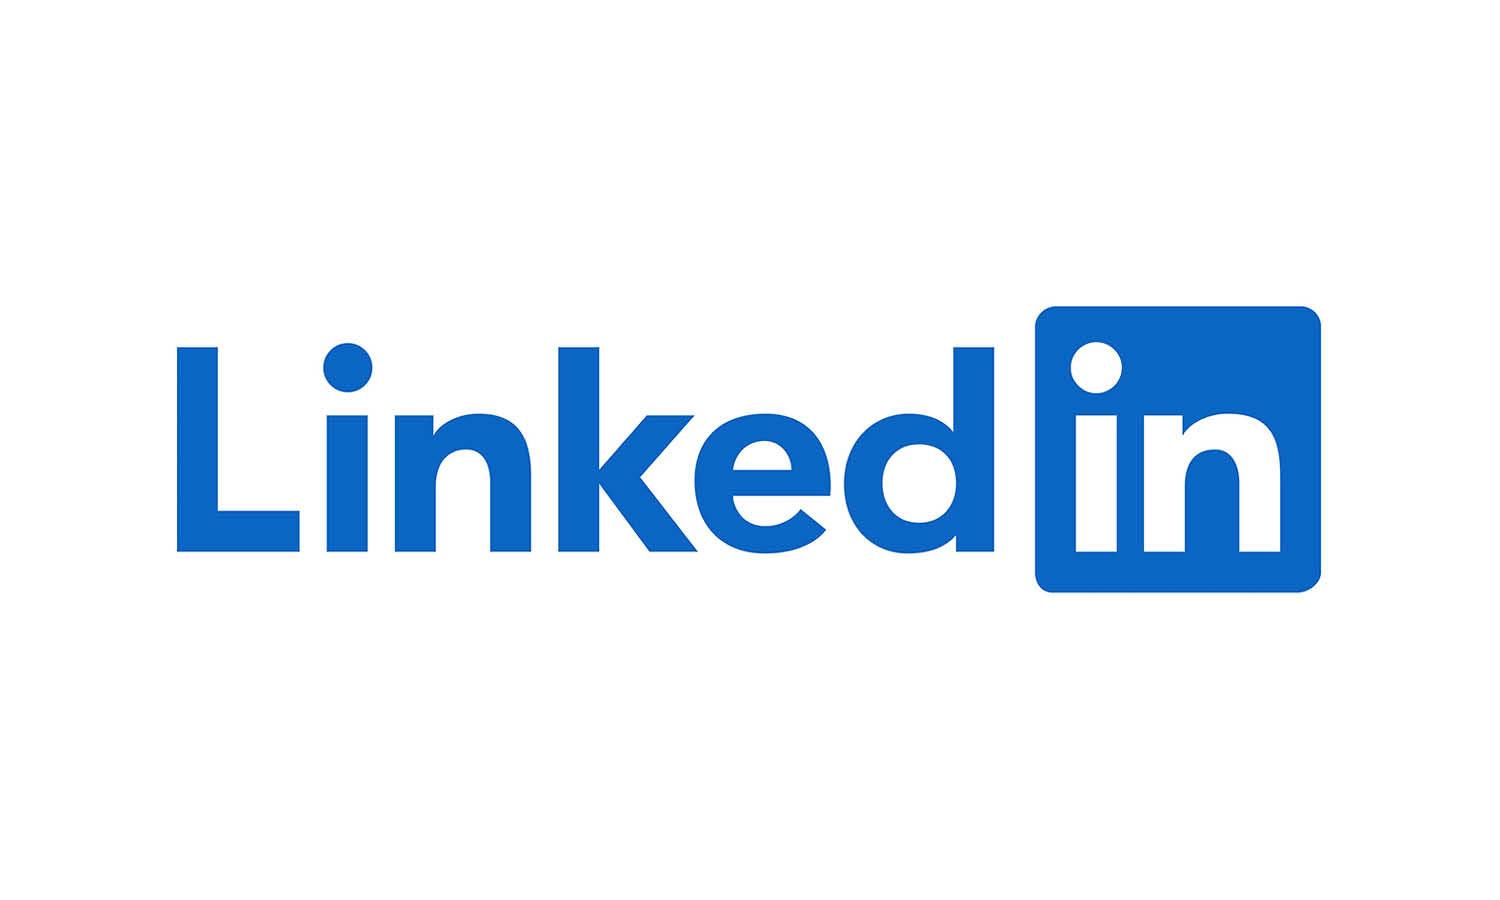 LinkedIn Logo Design: History & Evolution - Kreafolk